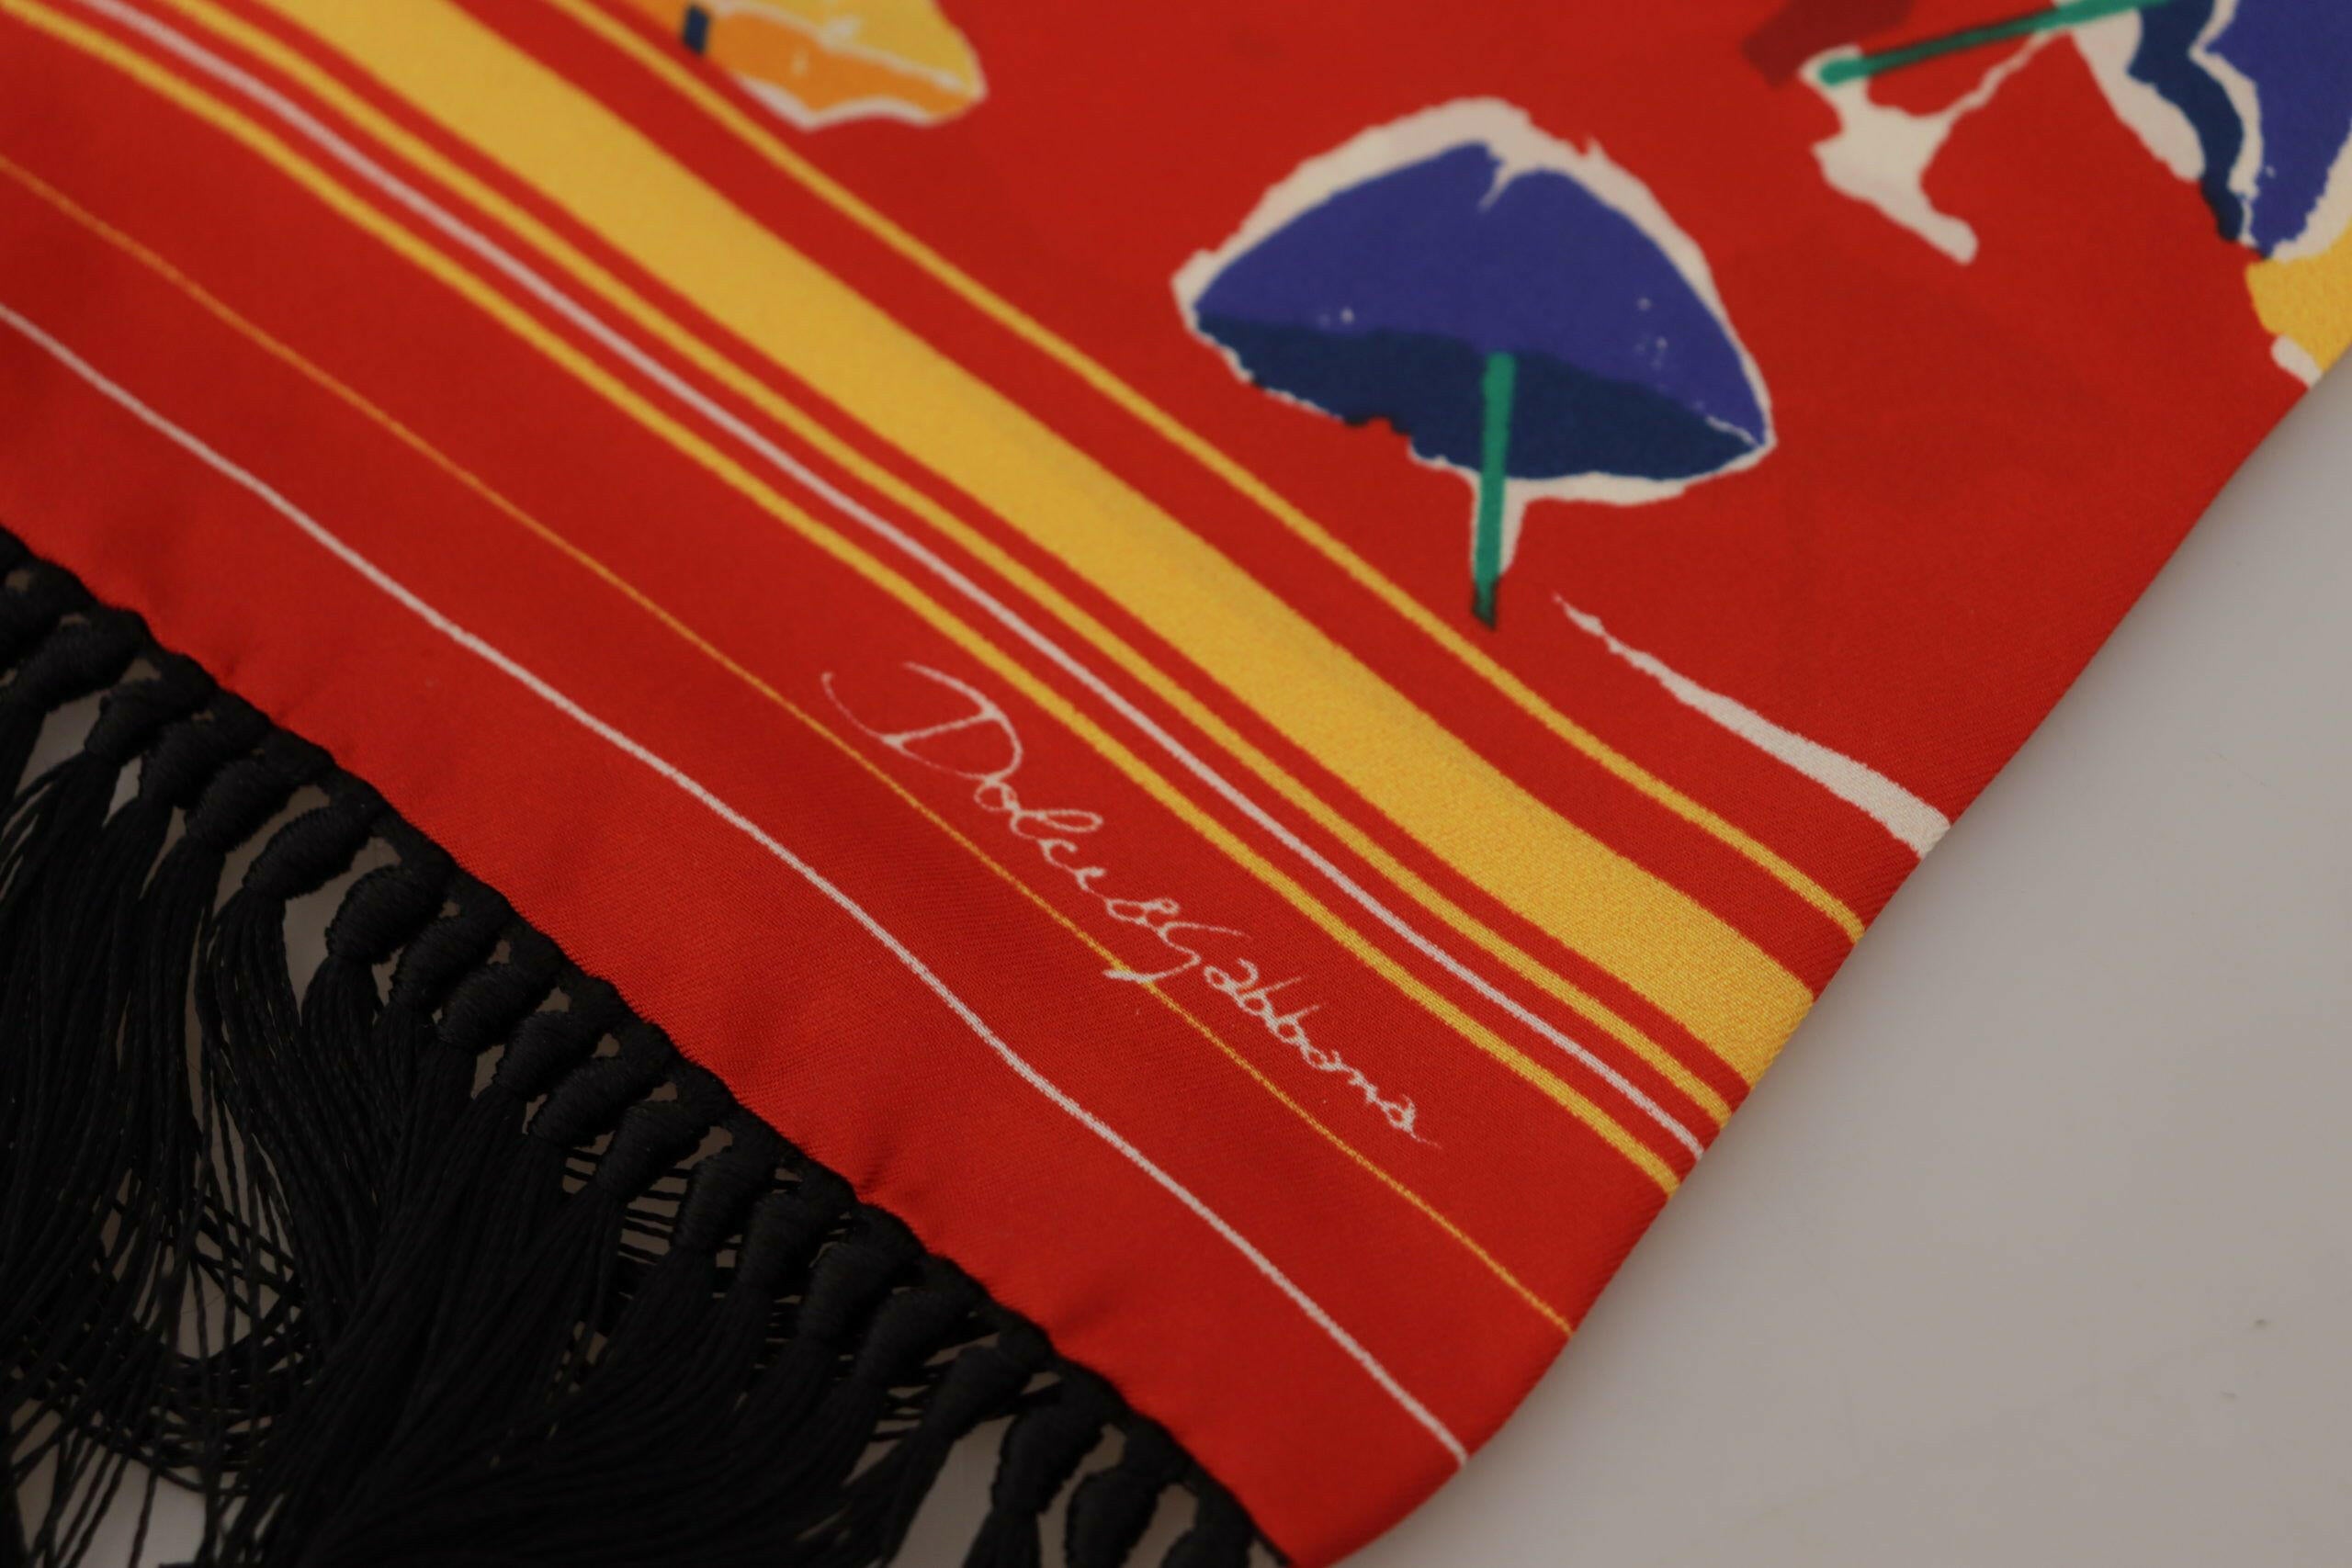 Dolce & Gabbana Multicolor DG Umbrellas Print Shawl Fringe Scarf - GENUINE AUTHENTIC BRAND LLC  